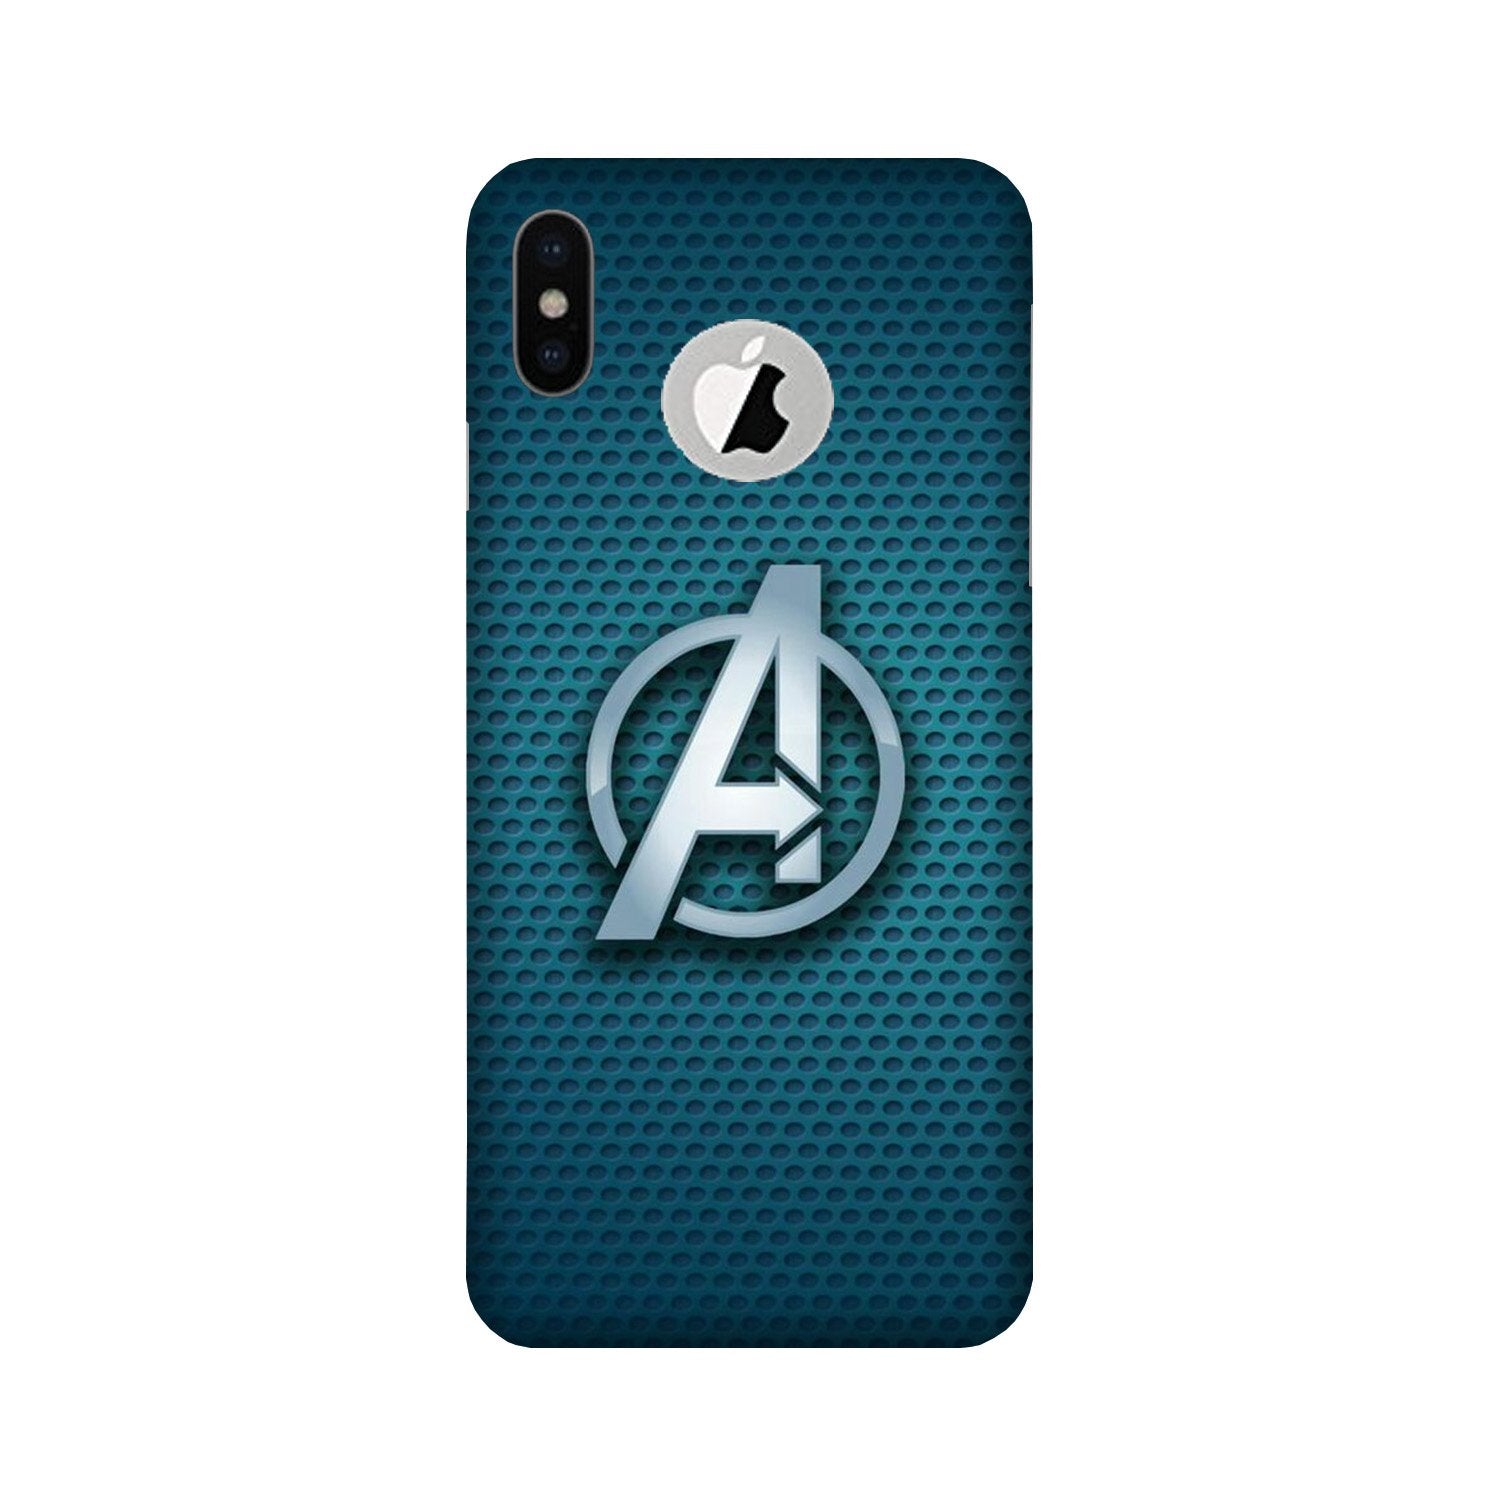 Avengers Case for iPhone Xs logo cut  (Design No. 246)